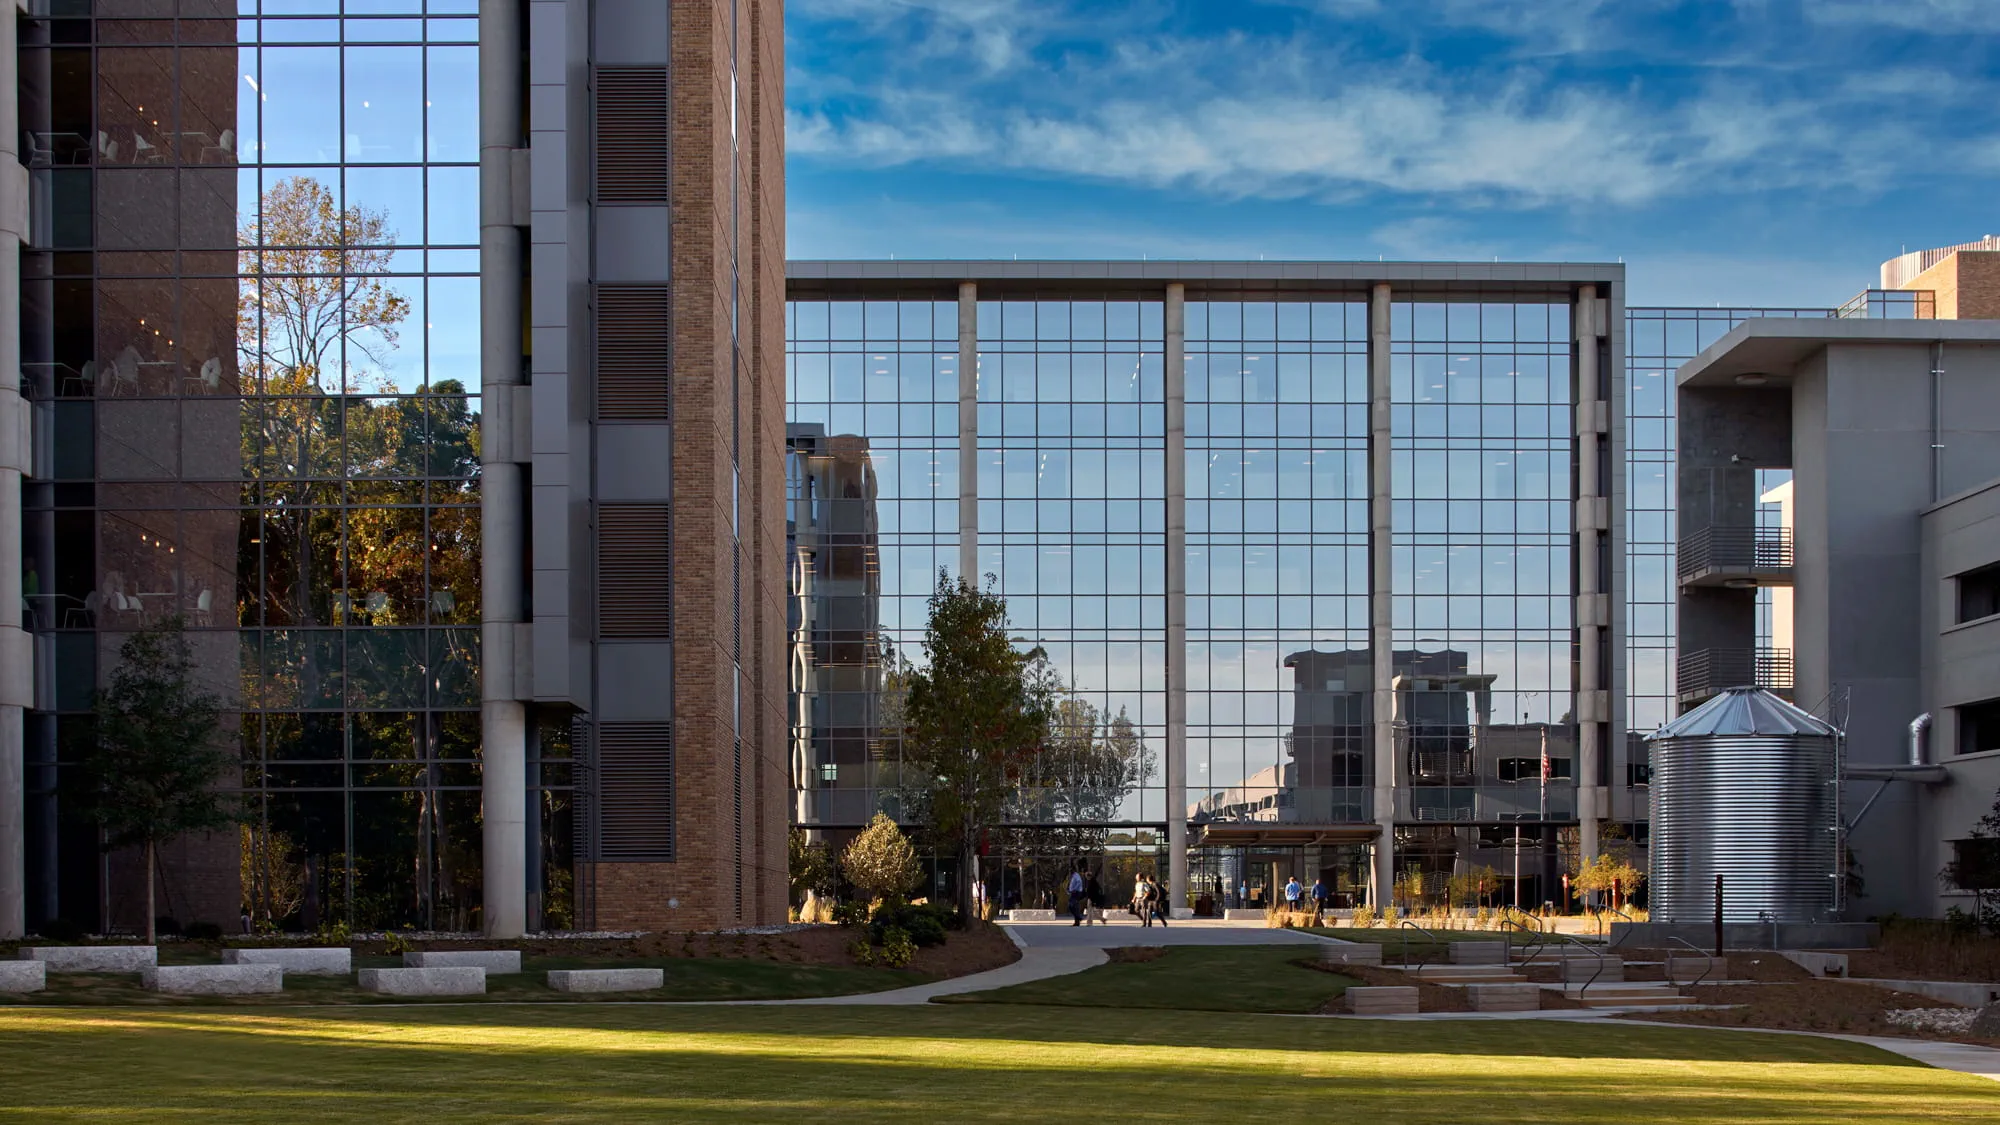 LPL Financial Carolinas Campus building exterior - credit TVS Design